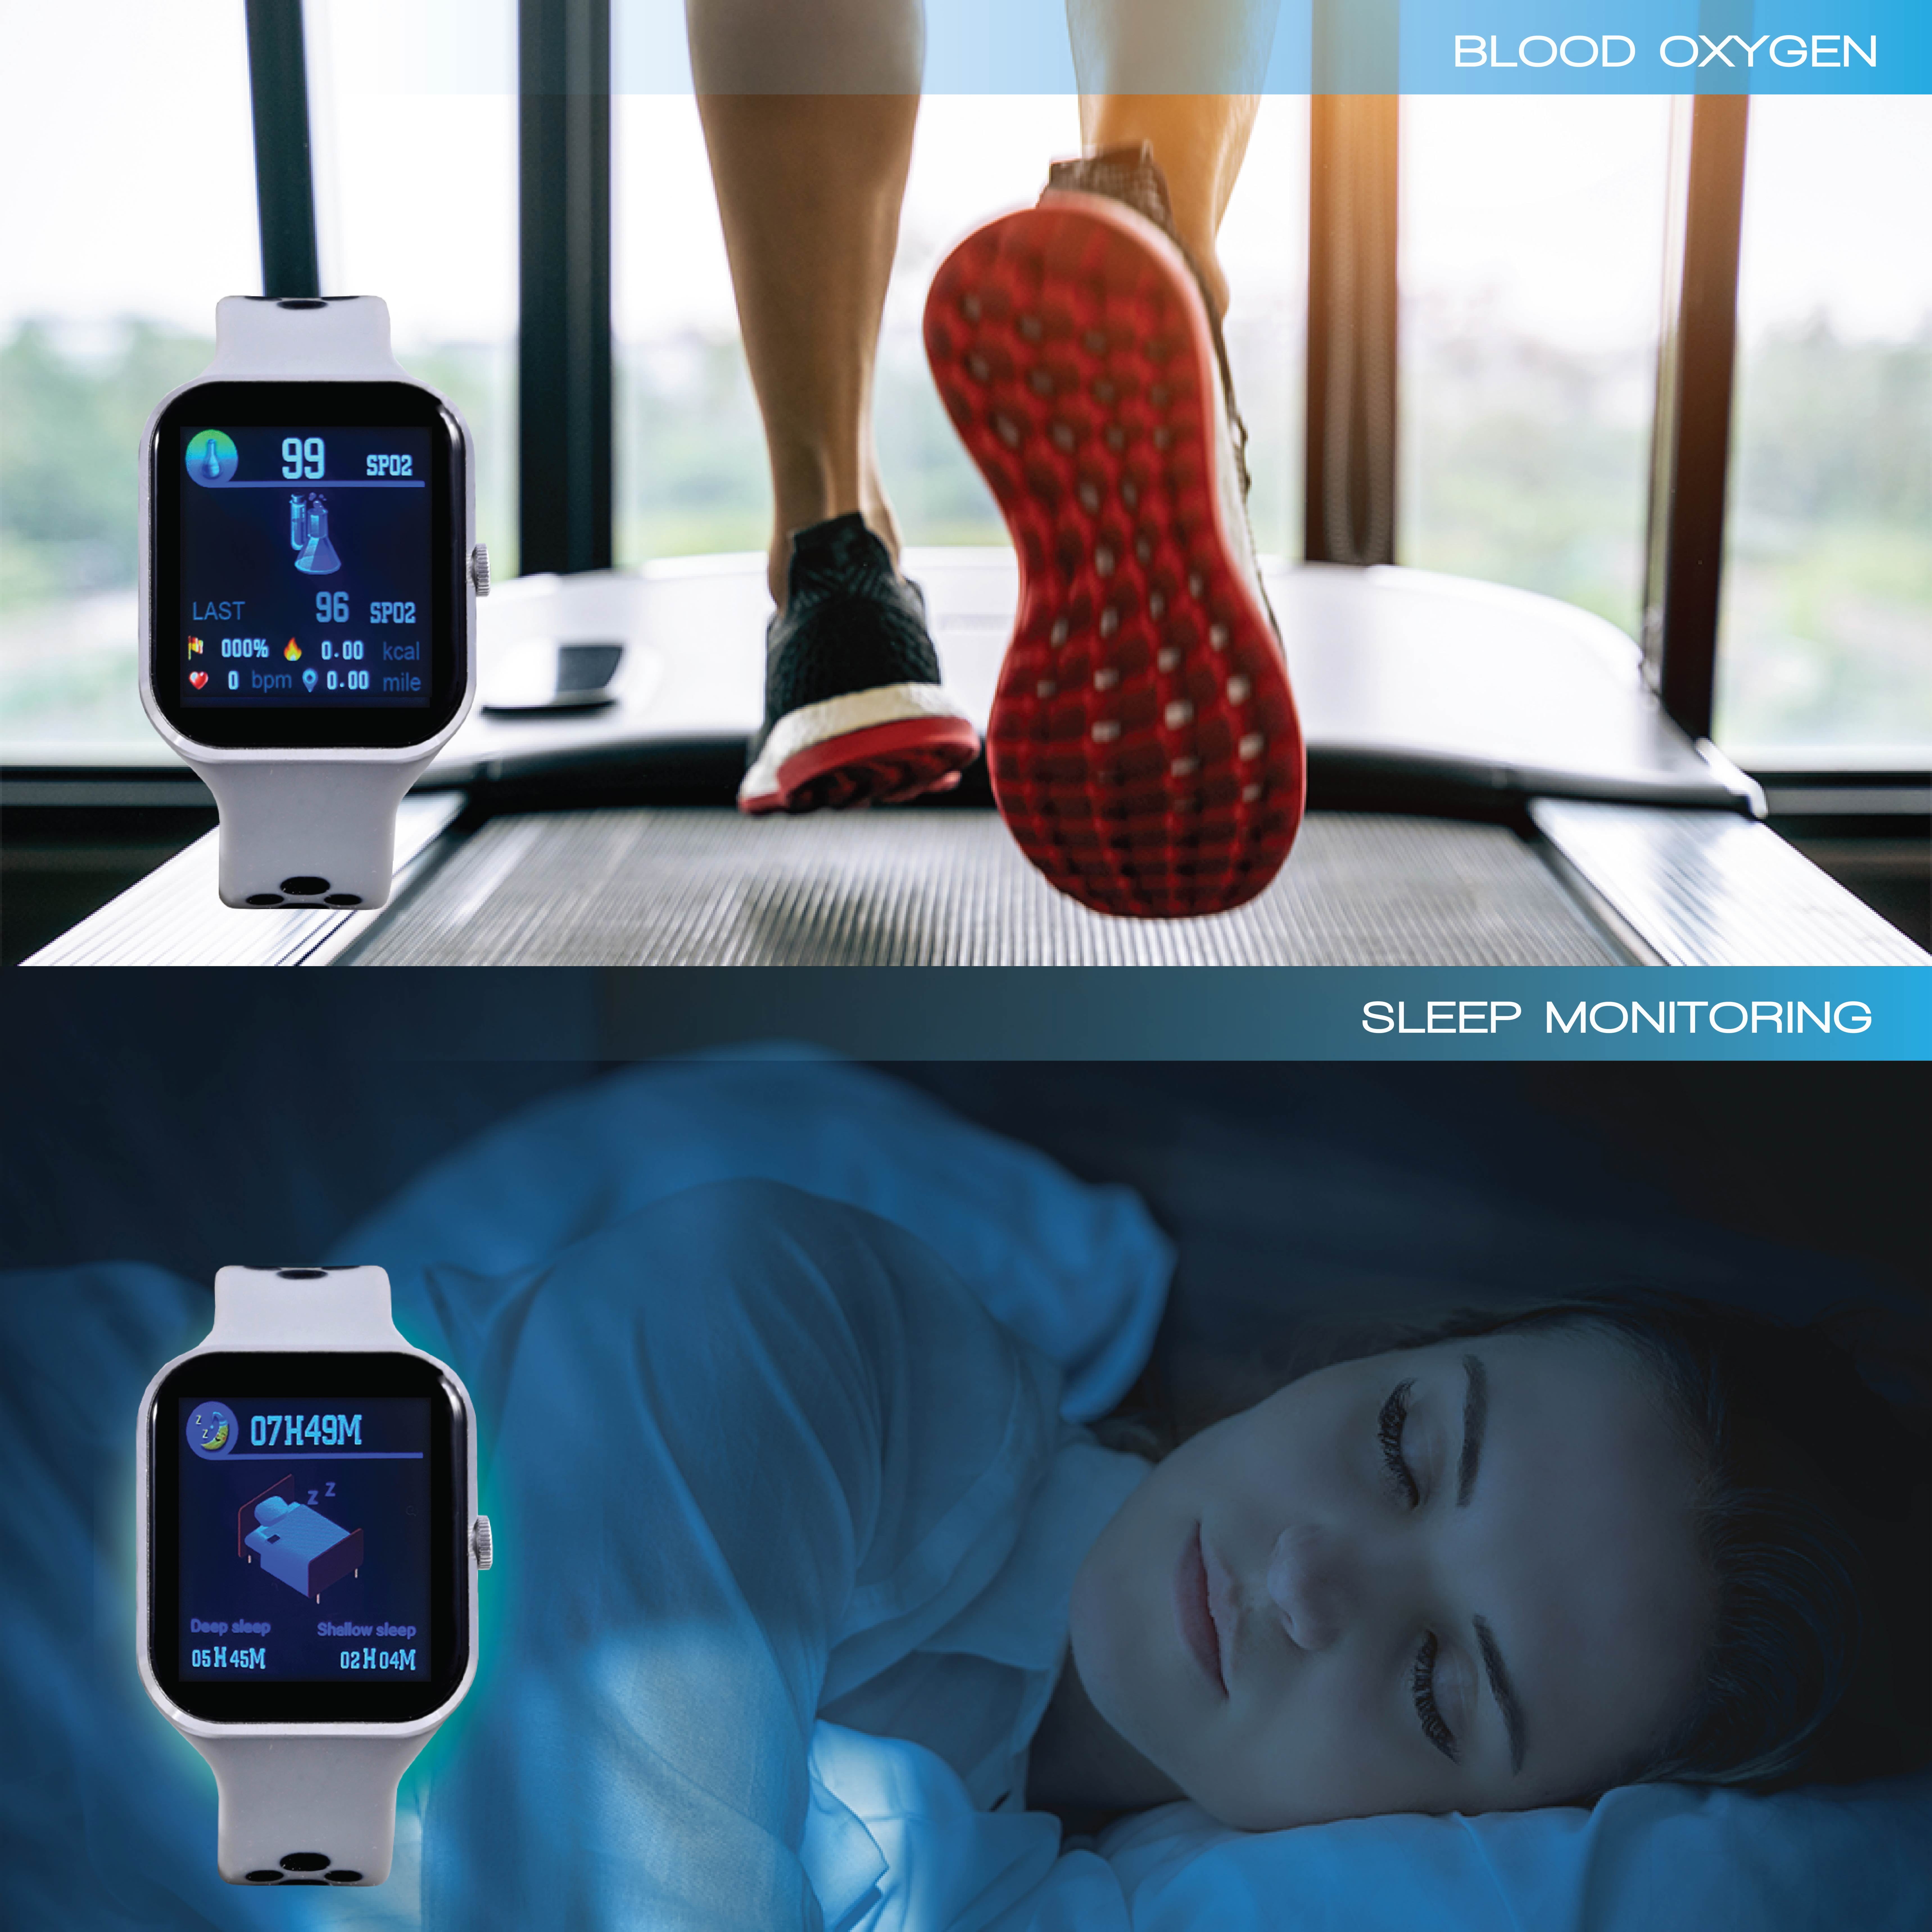 Izod Unisex Smart Watch with Silicone Strap in Black Izo9397bu, Adult Unisex, Size: One Size